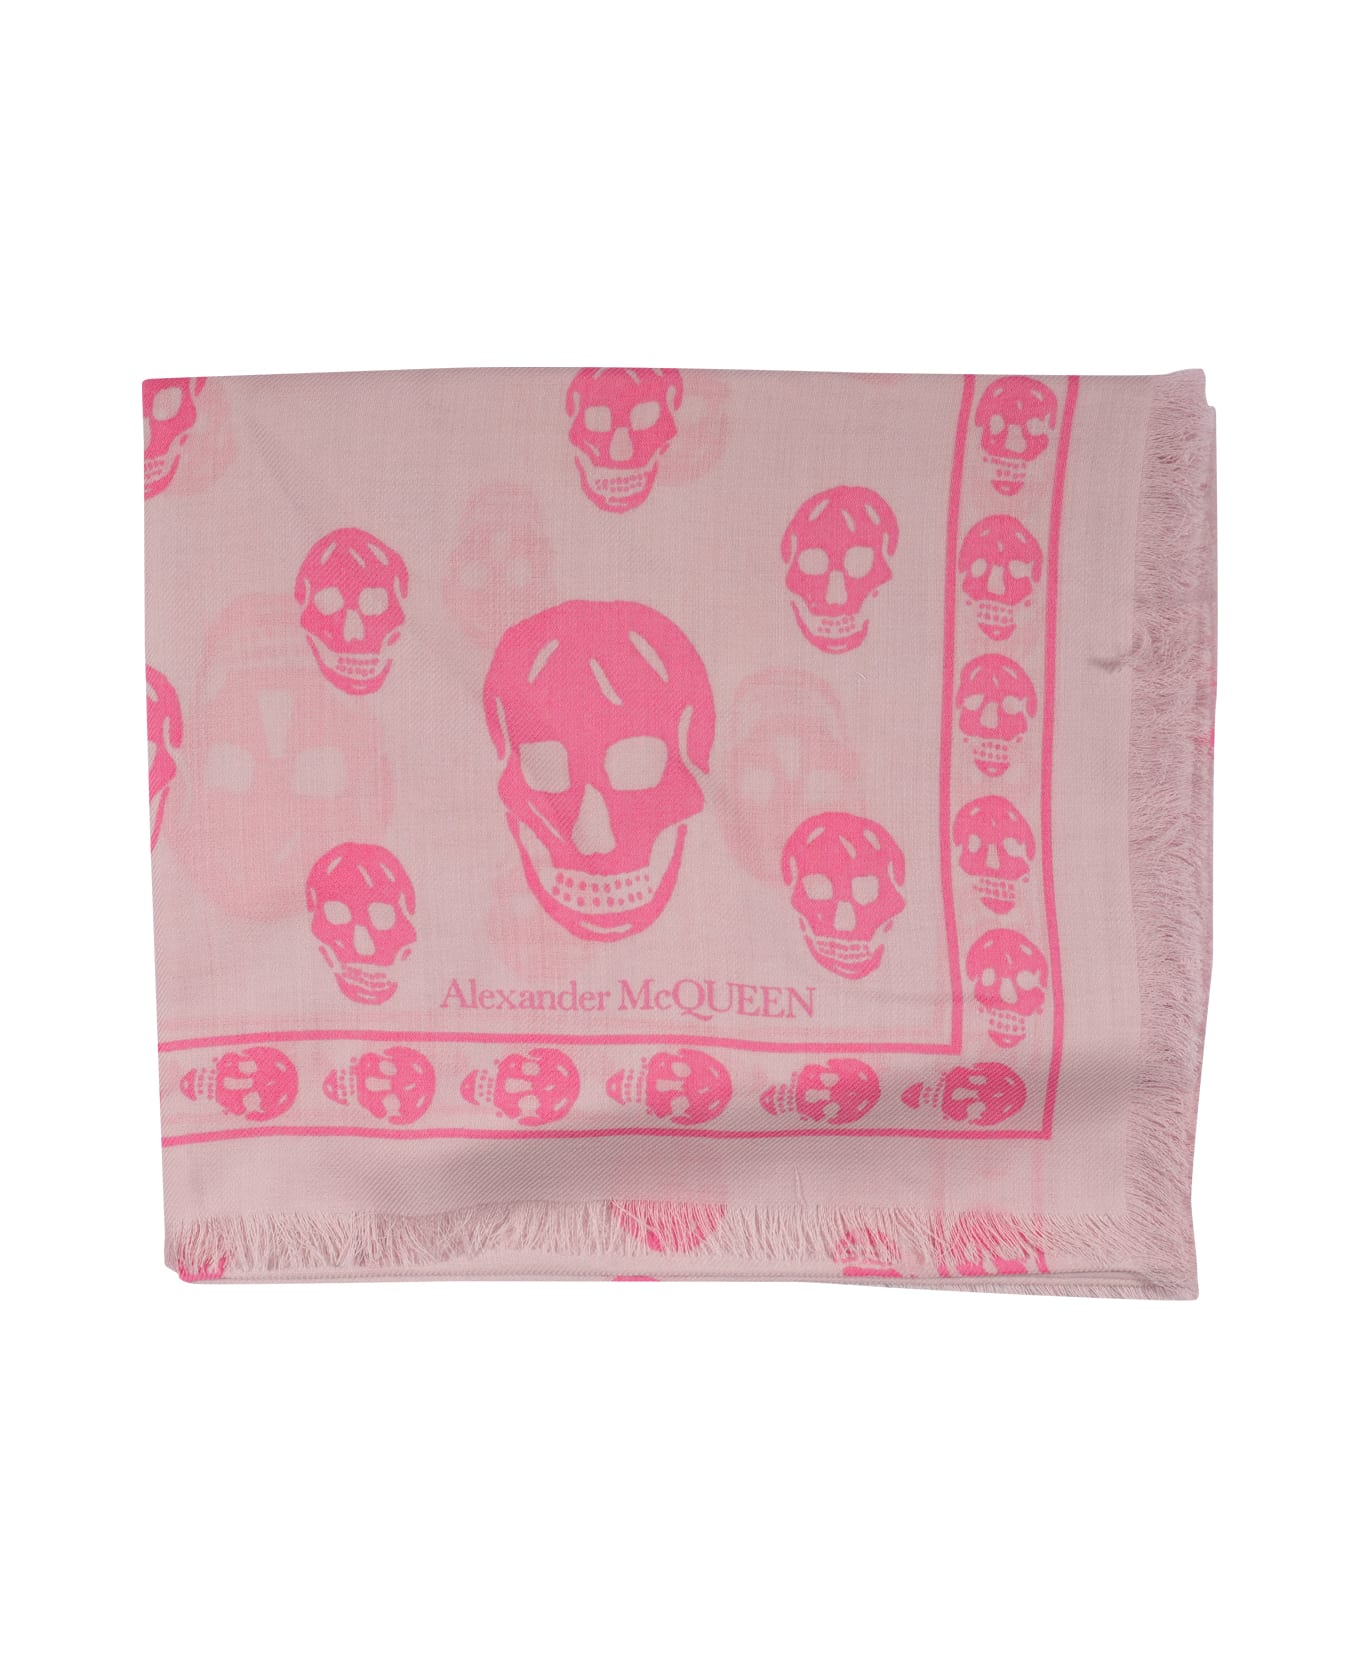 Alexander McQueen Skull Scarf - Pink Sugar Pink